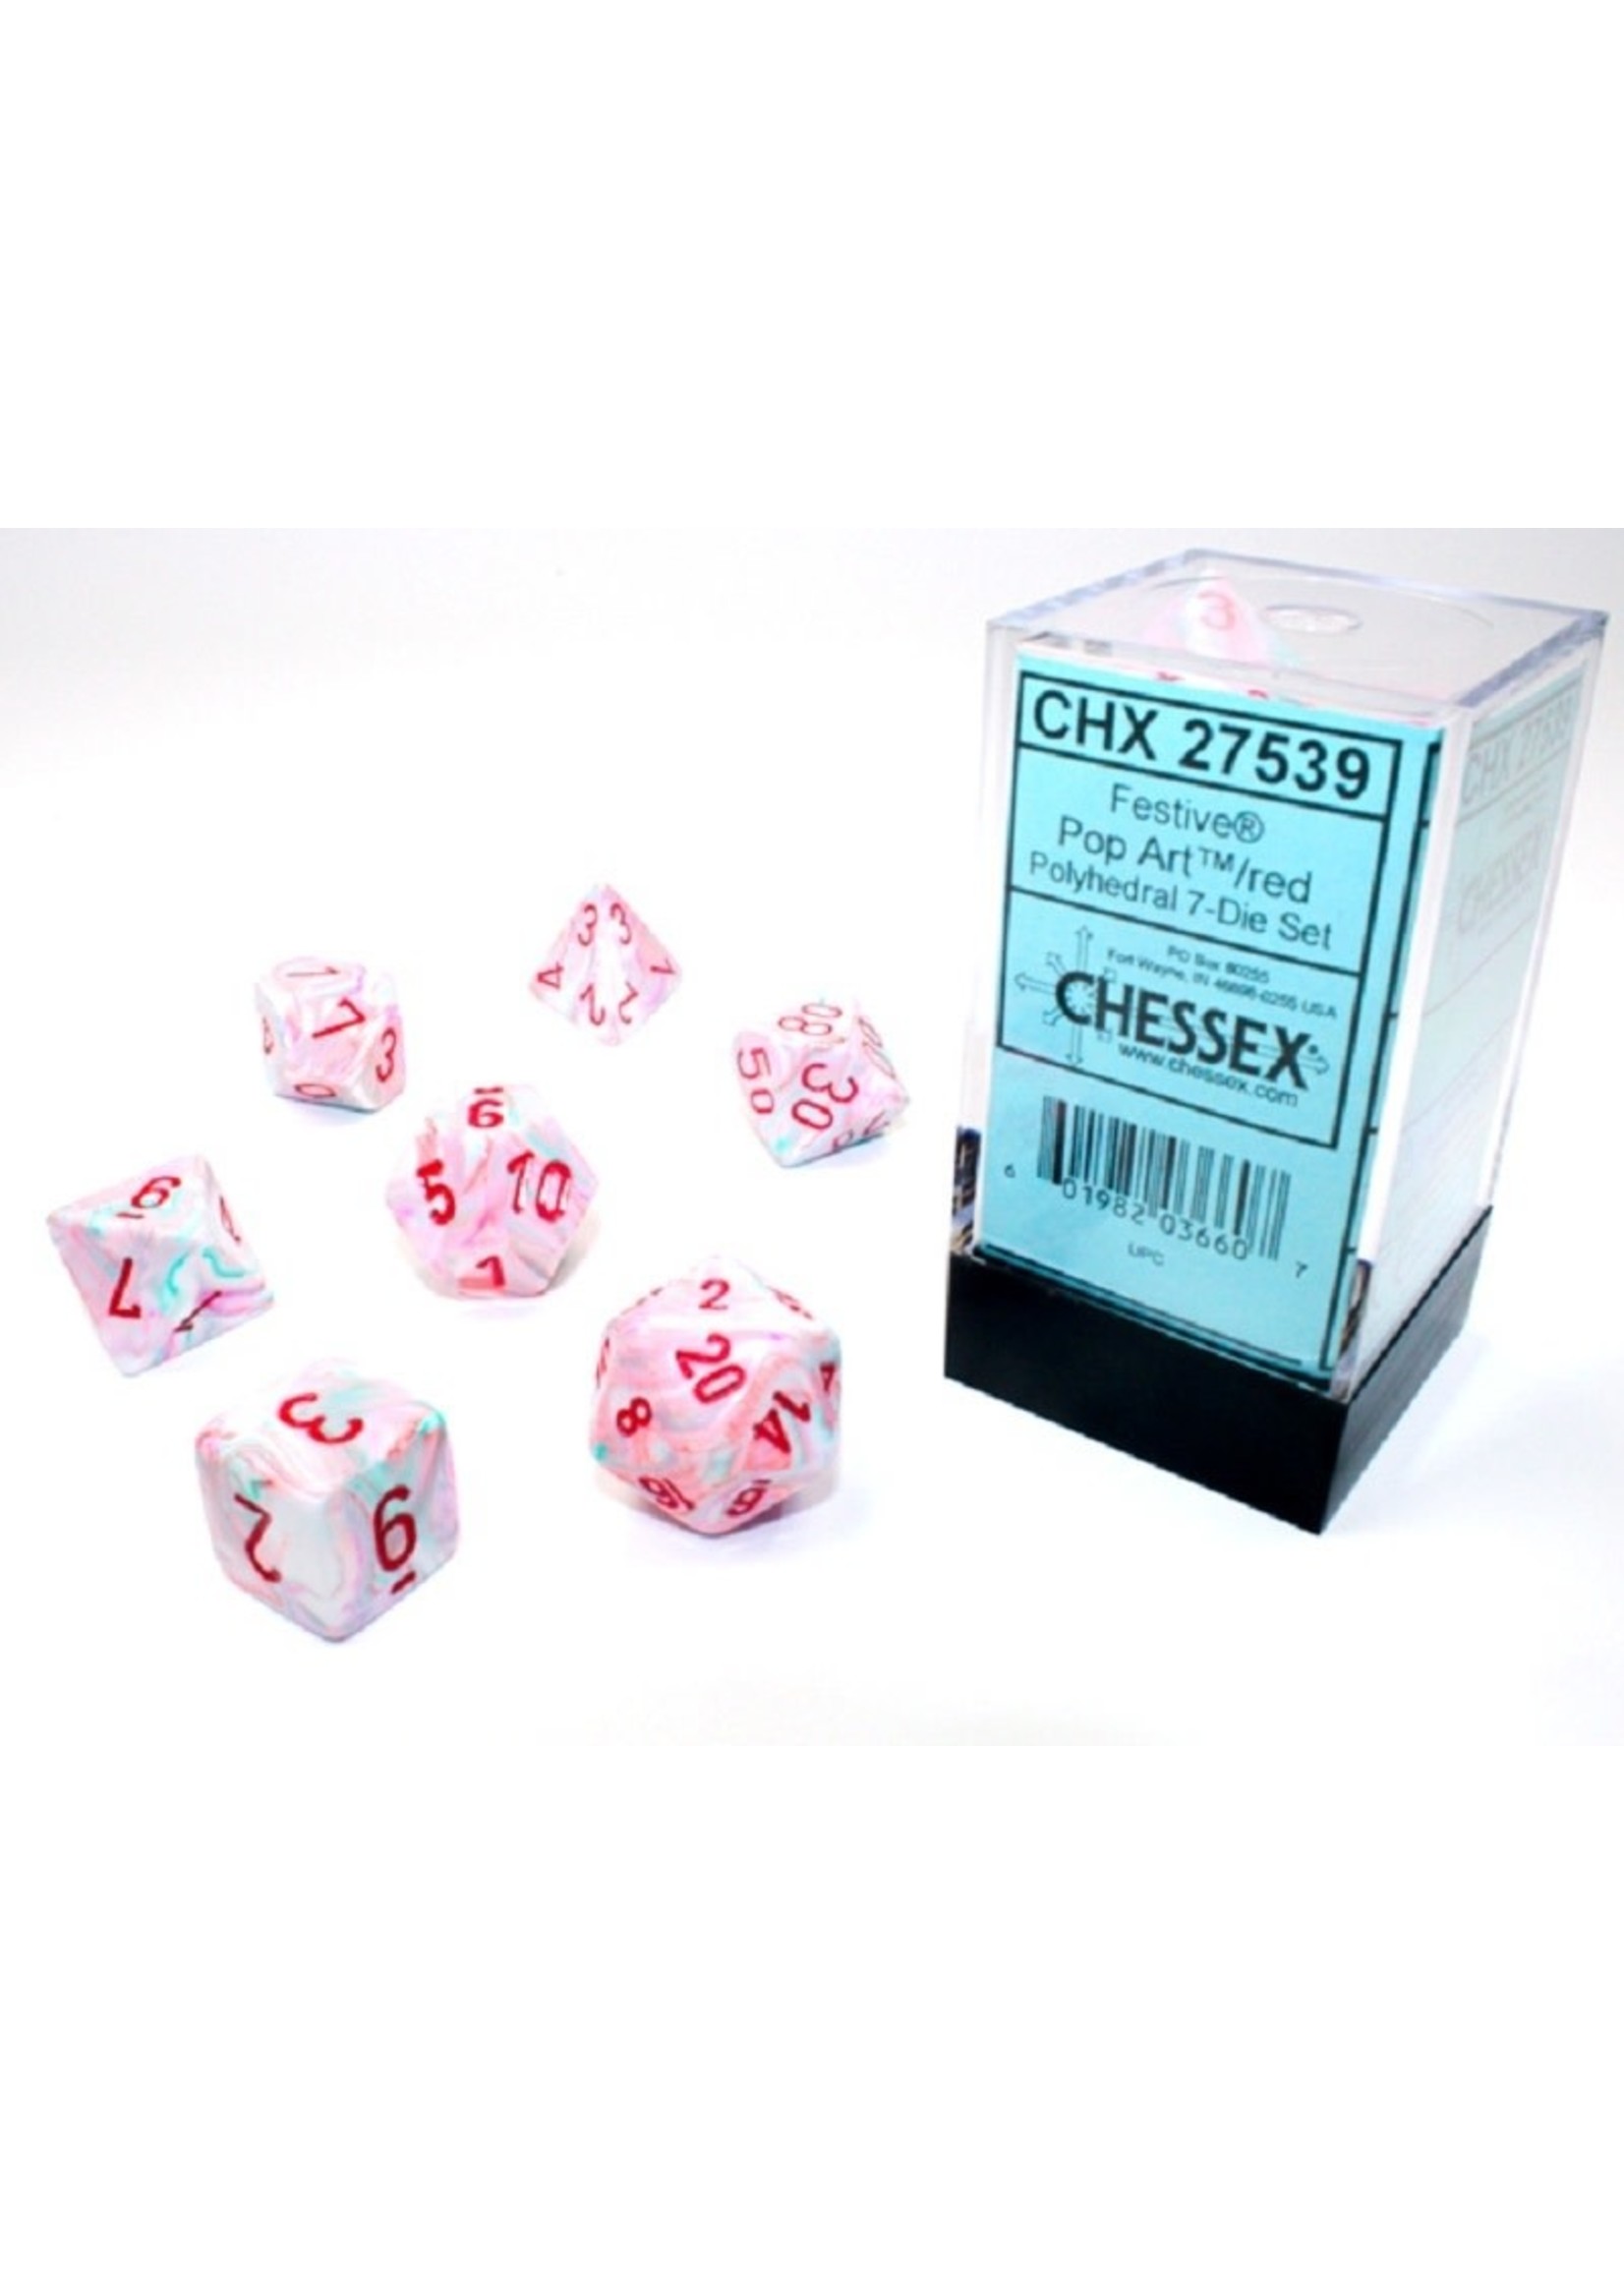 Chessex Dice set - Festive - Pop Art/Red